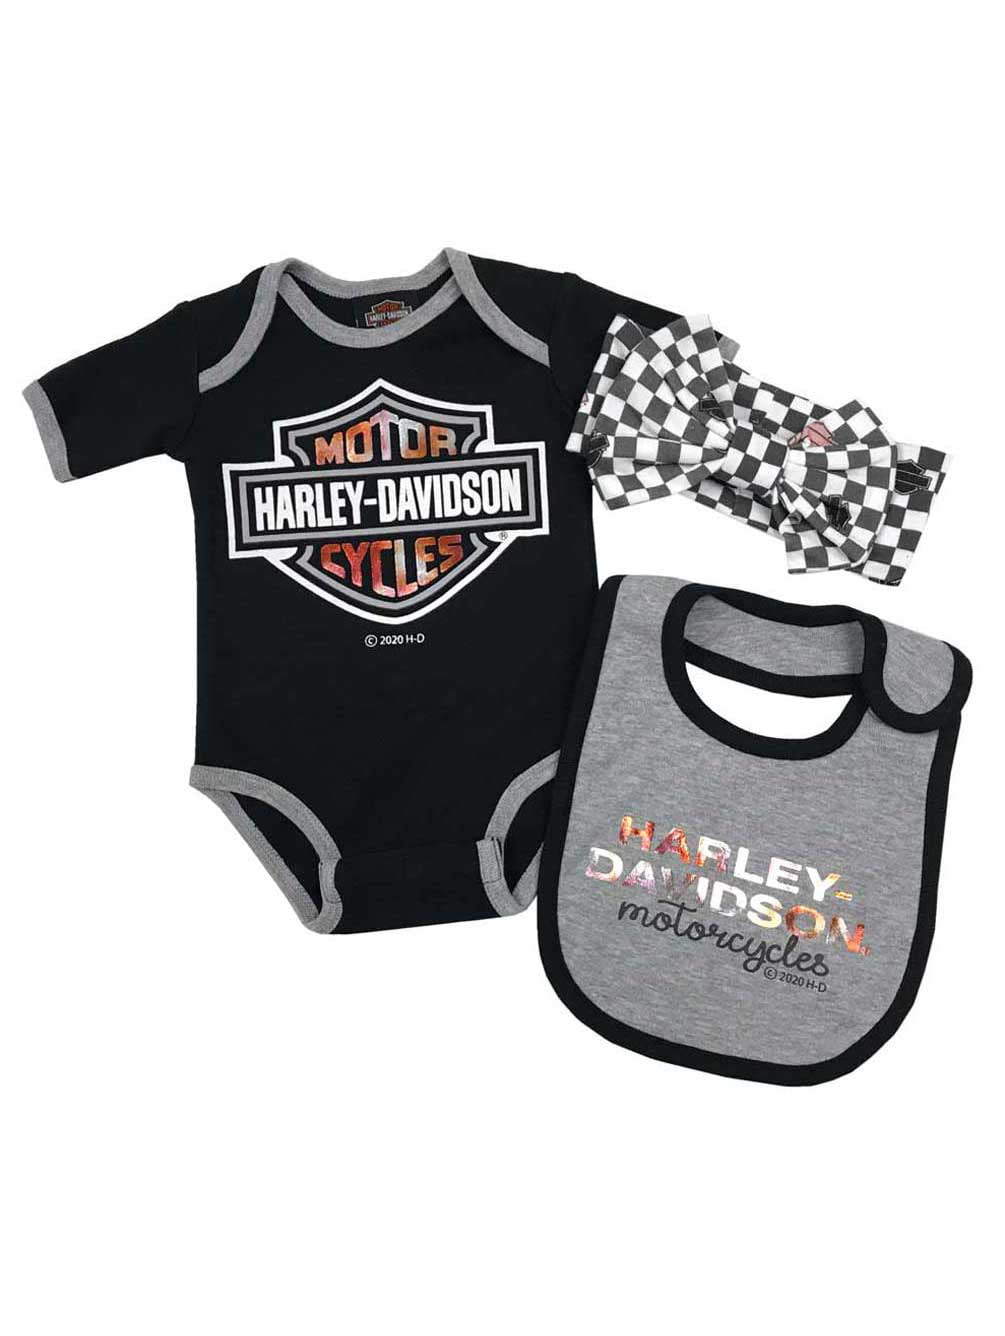 Harley Davidson Baby Bodysuit Infant Gift Unisex Clothes One Piece Grow Black